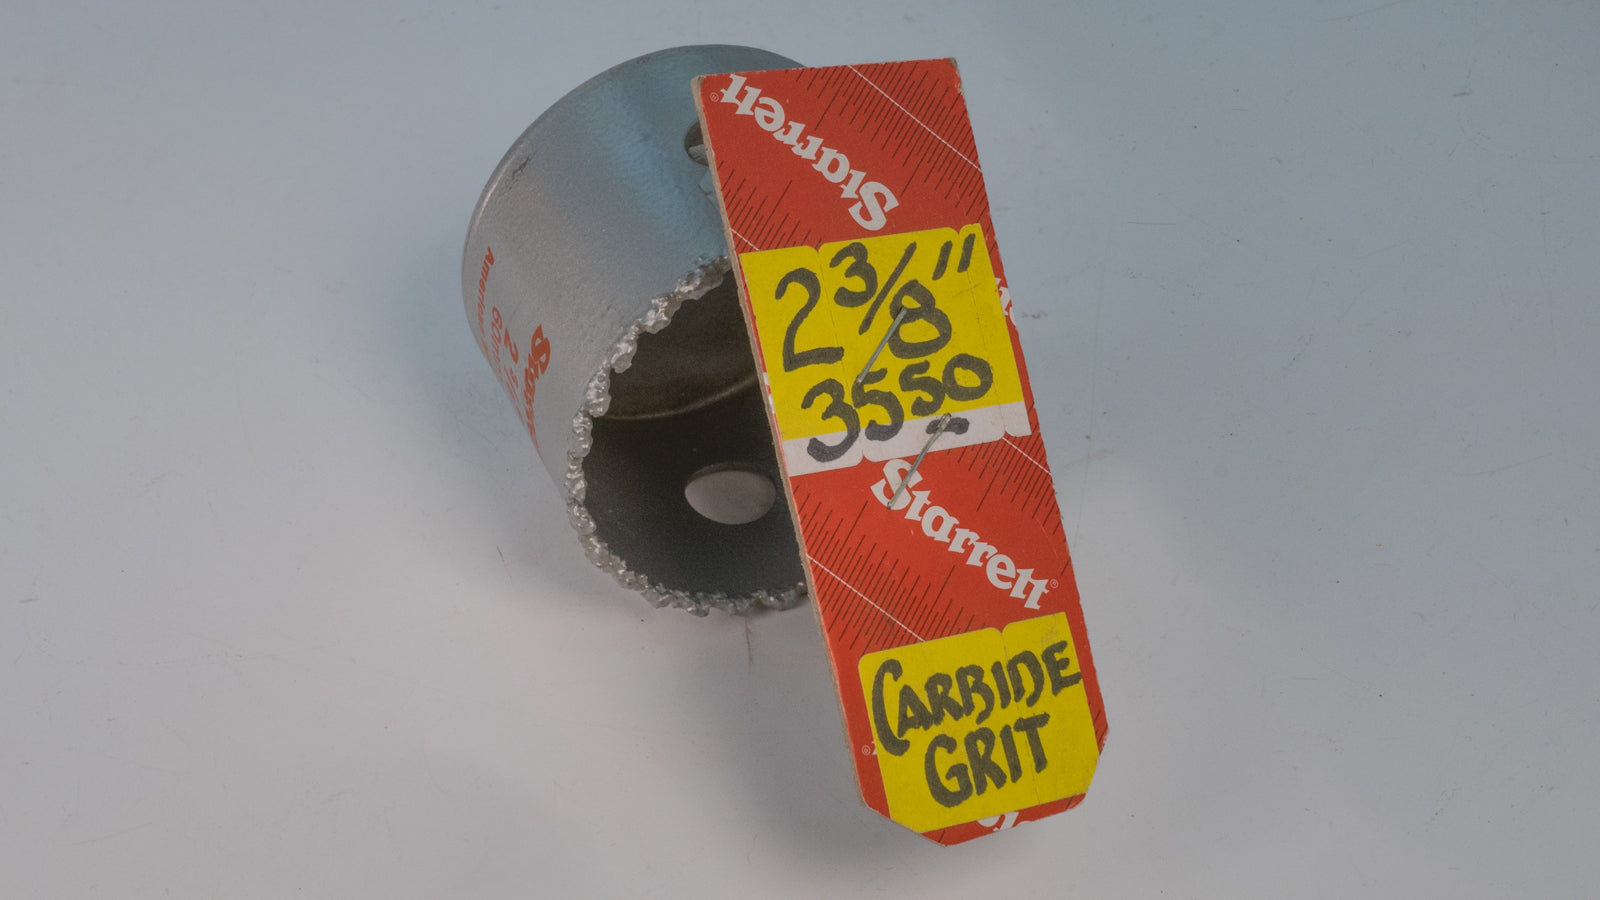 Starrett 2-3/8" Carbide Grit Hole Saw